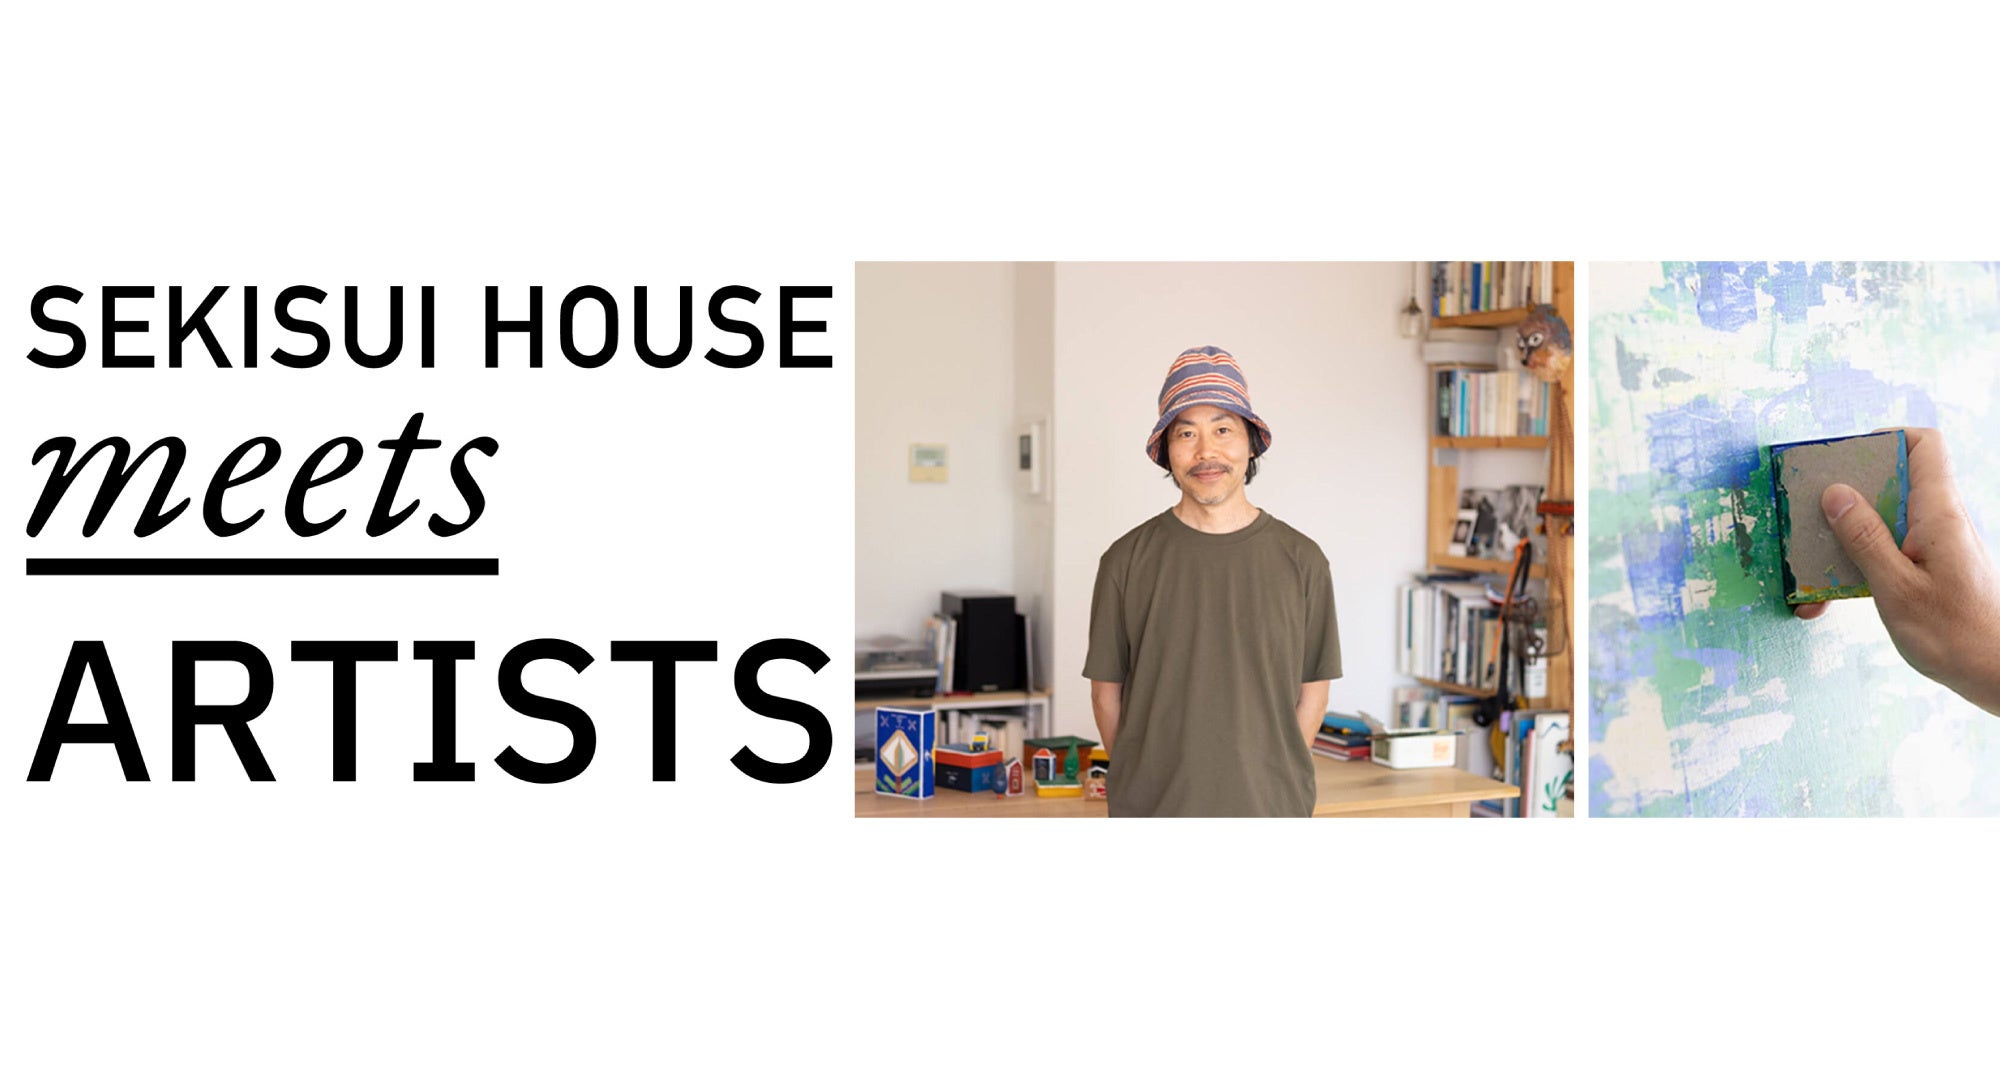 SEKISUI HOUSE meets ARTISTSɂLIVE PAINTING WORKSHOP̊JÂIMEET YOUR ART FESTIVALɂ